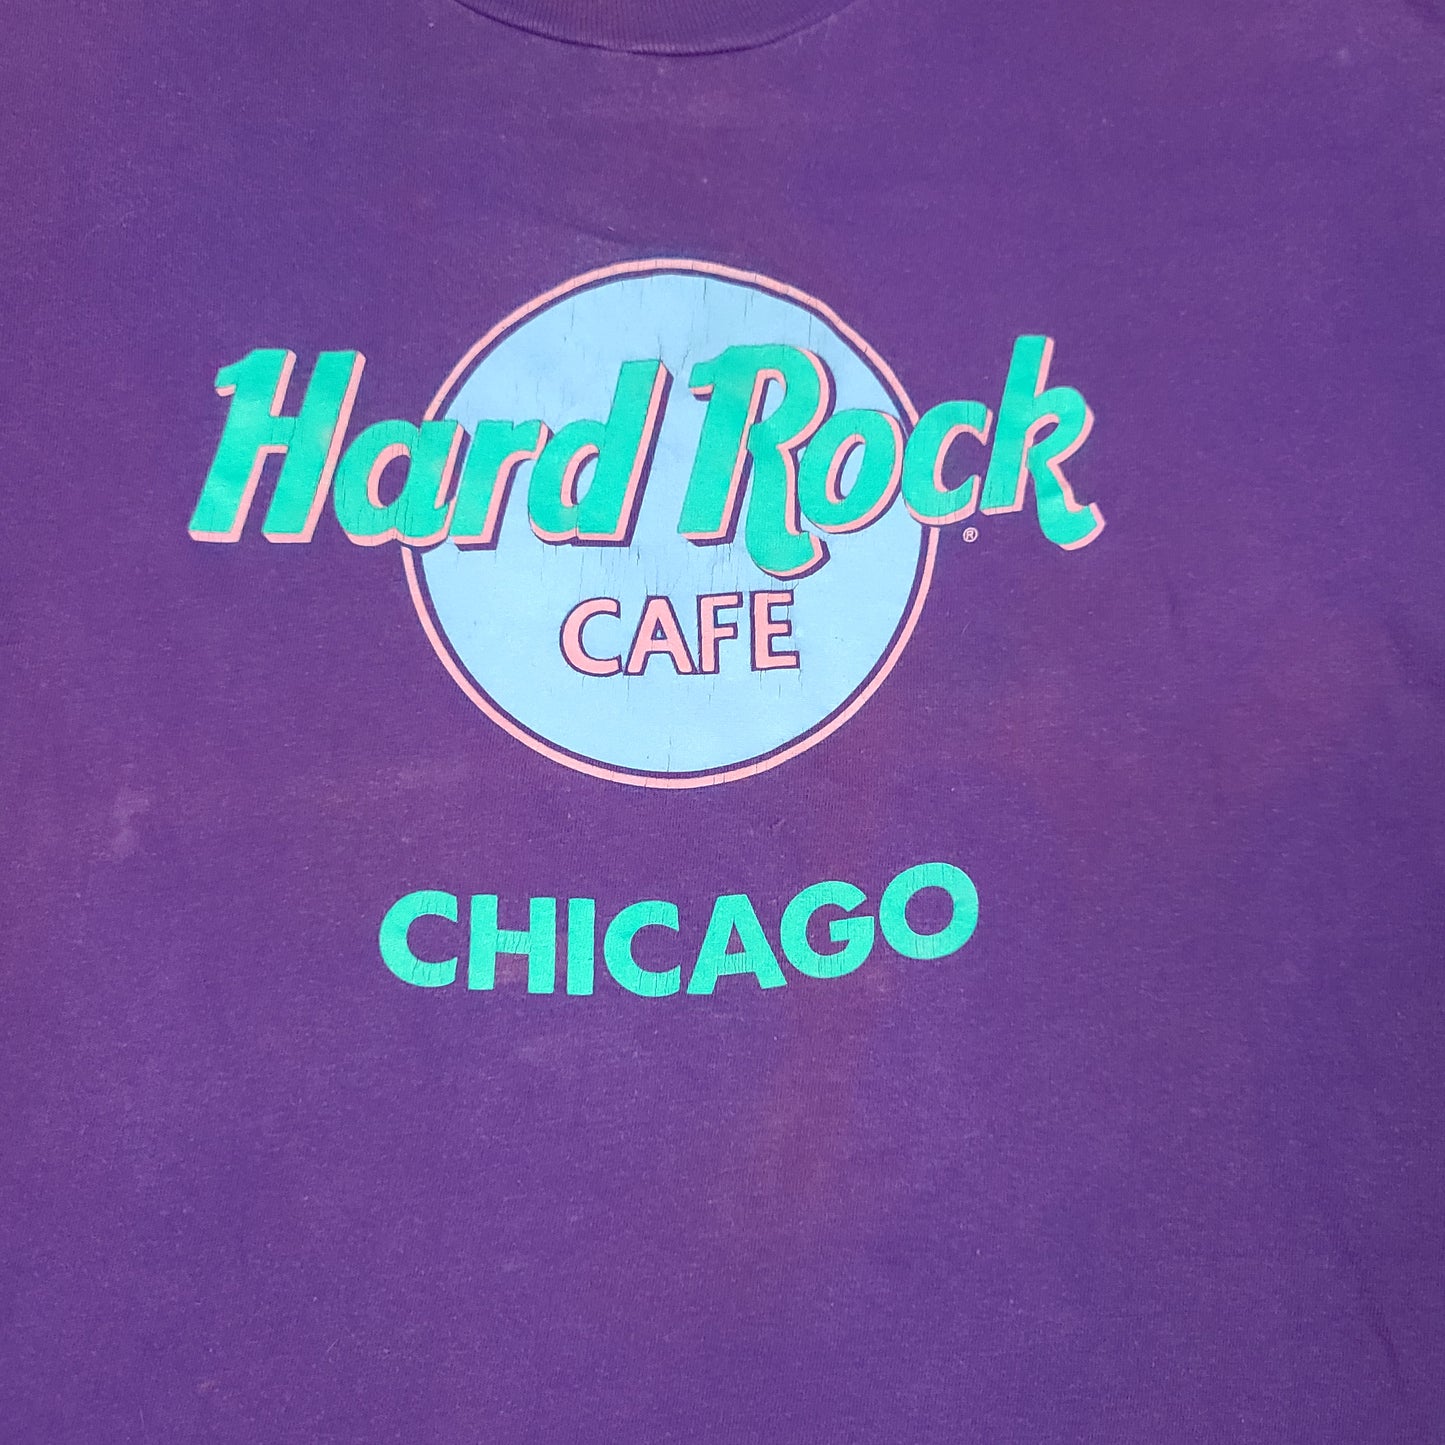 Vintage Hard Rock Cafe Chicago Purple Tee